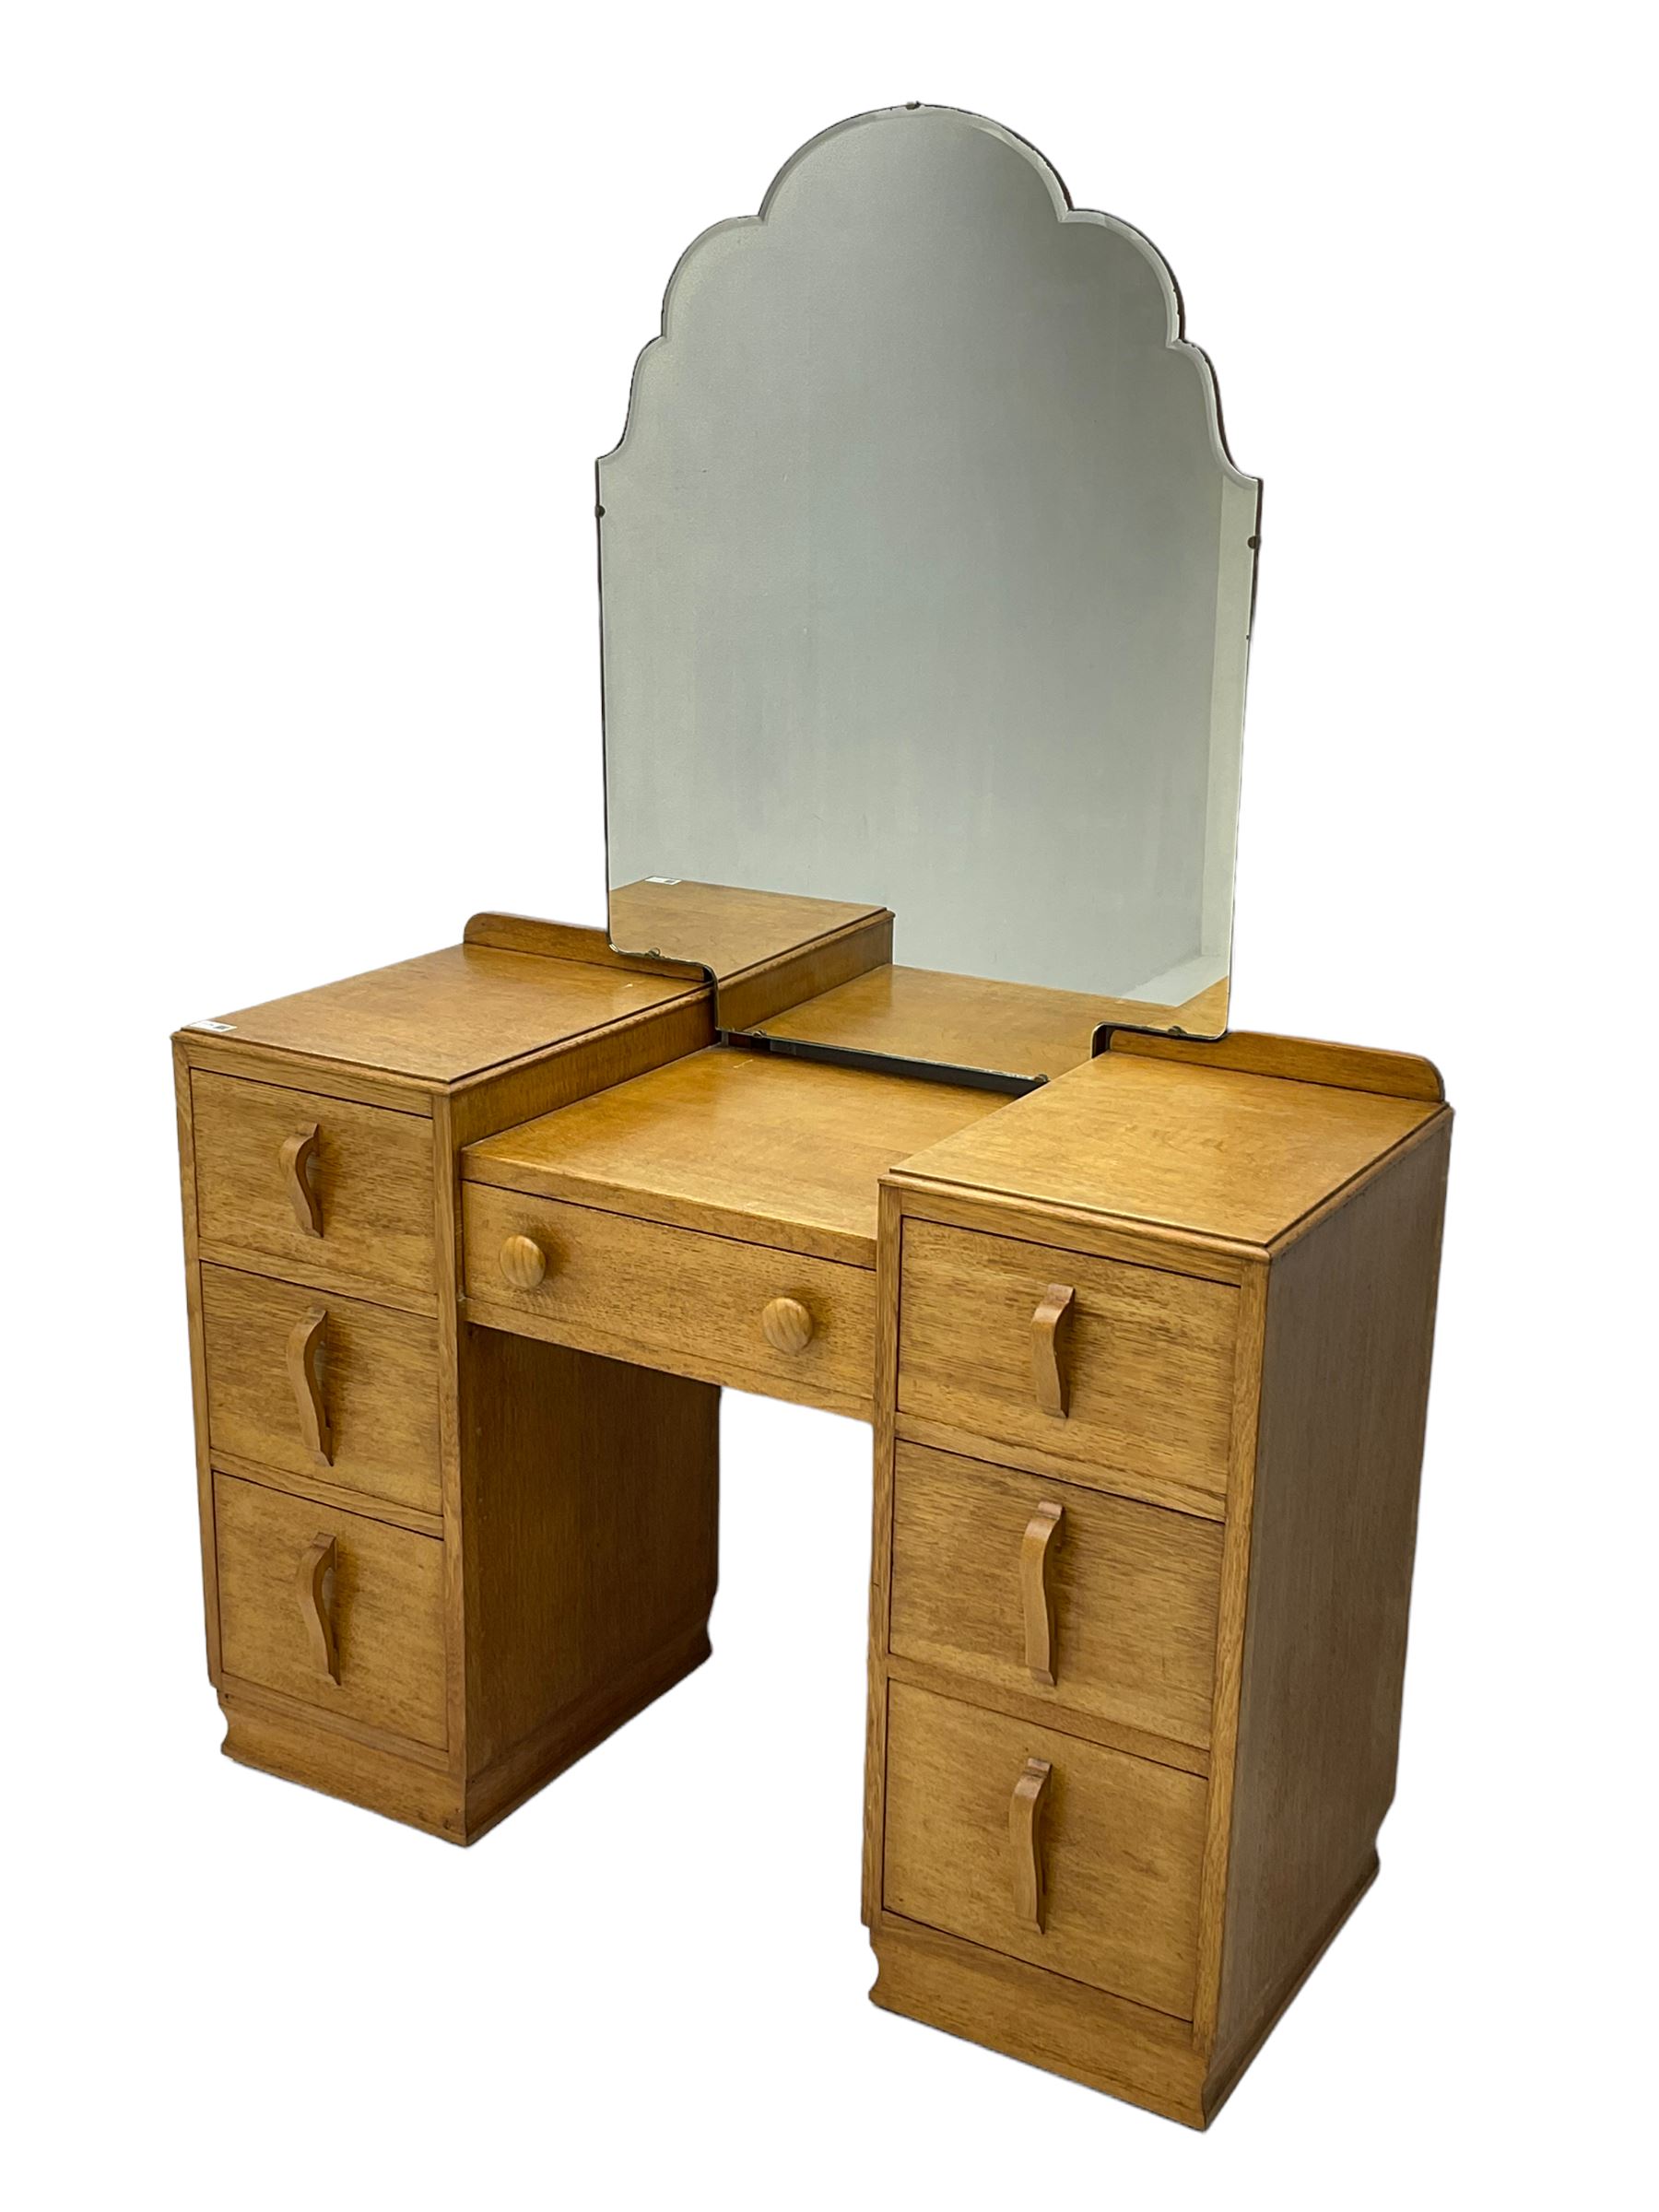 Mid-20th century light oak twin pedestal dressing table - Image 4 of 6